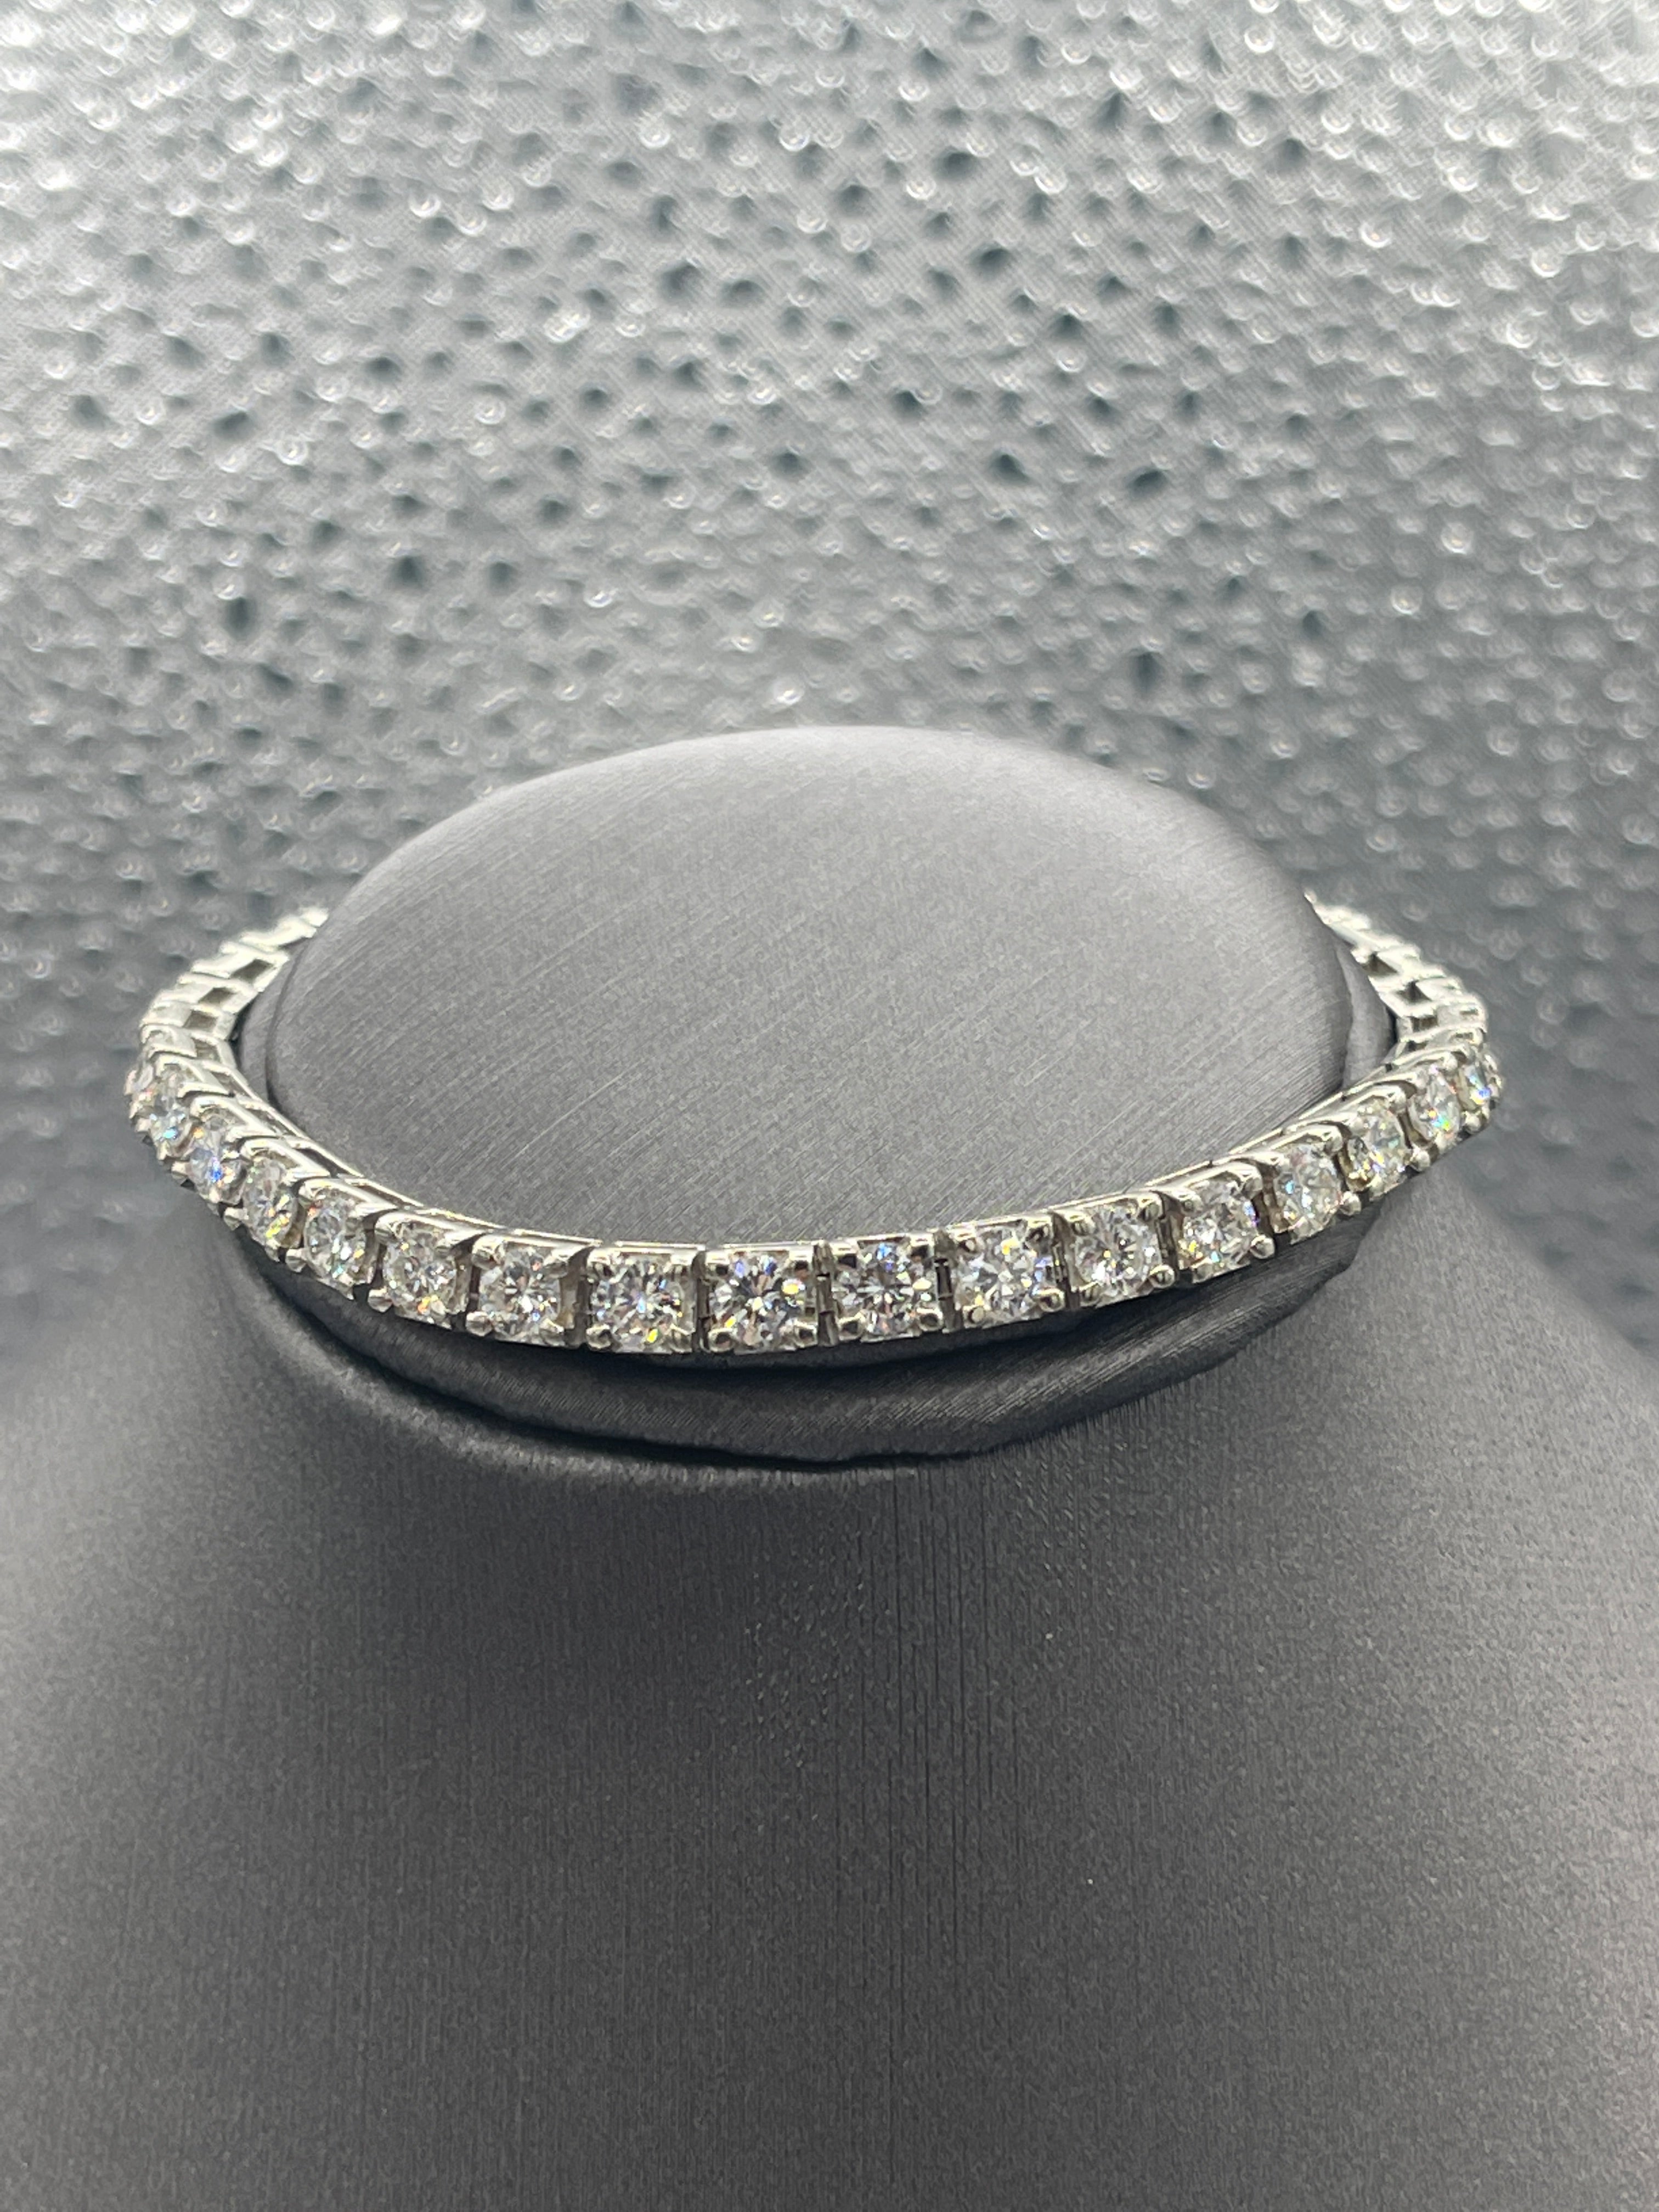 Tennis Bracelet with 2.565 Carat TW of Diamonds in 14k White Gold -  Opulenti Jewellers